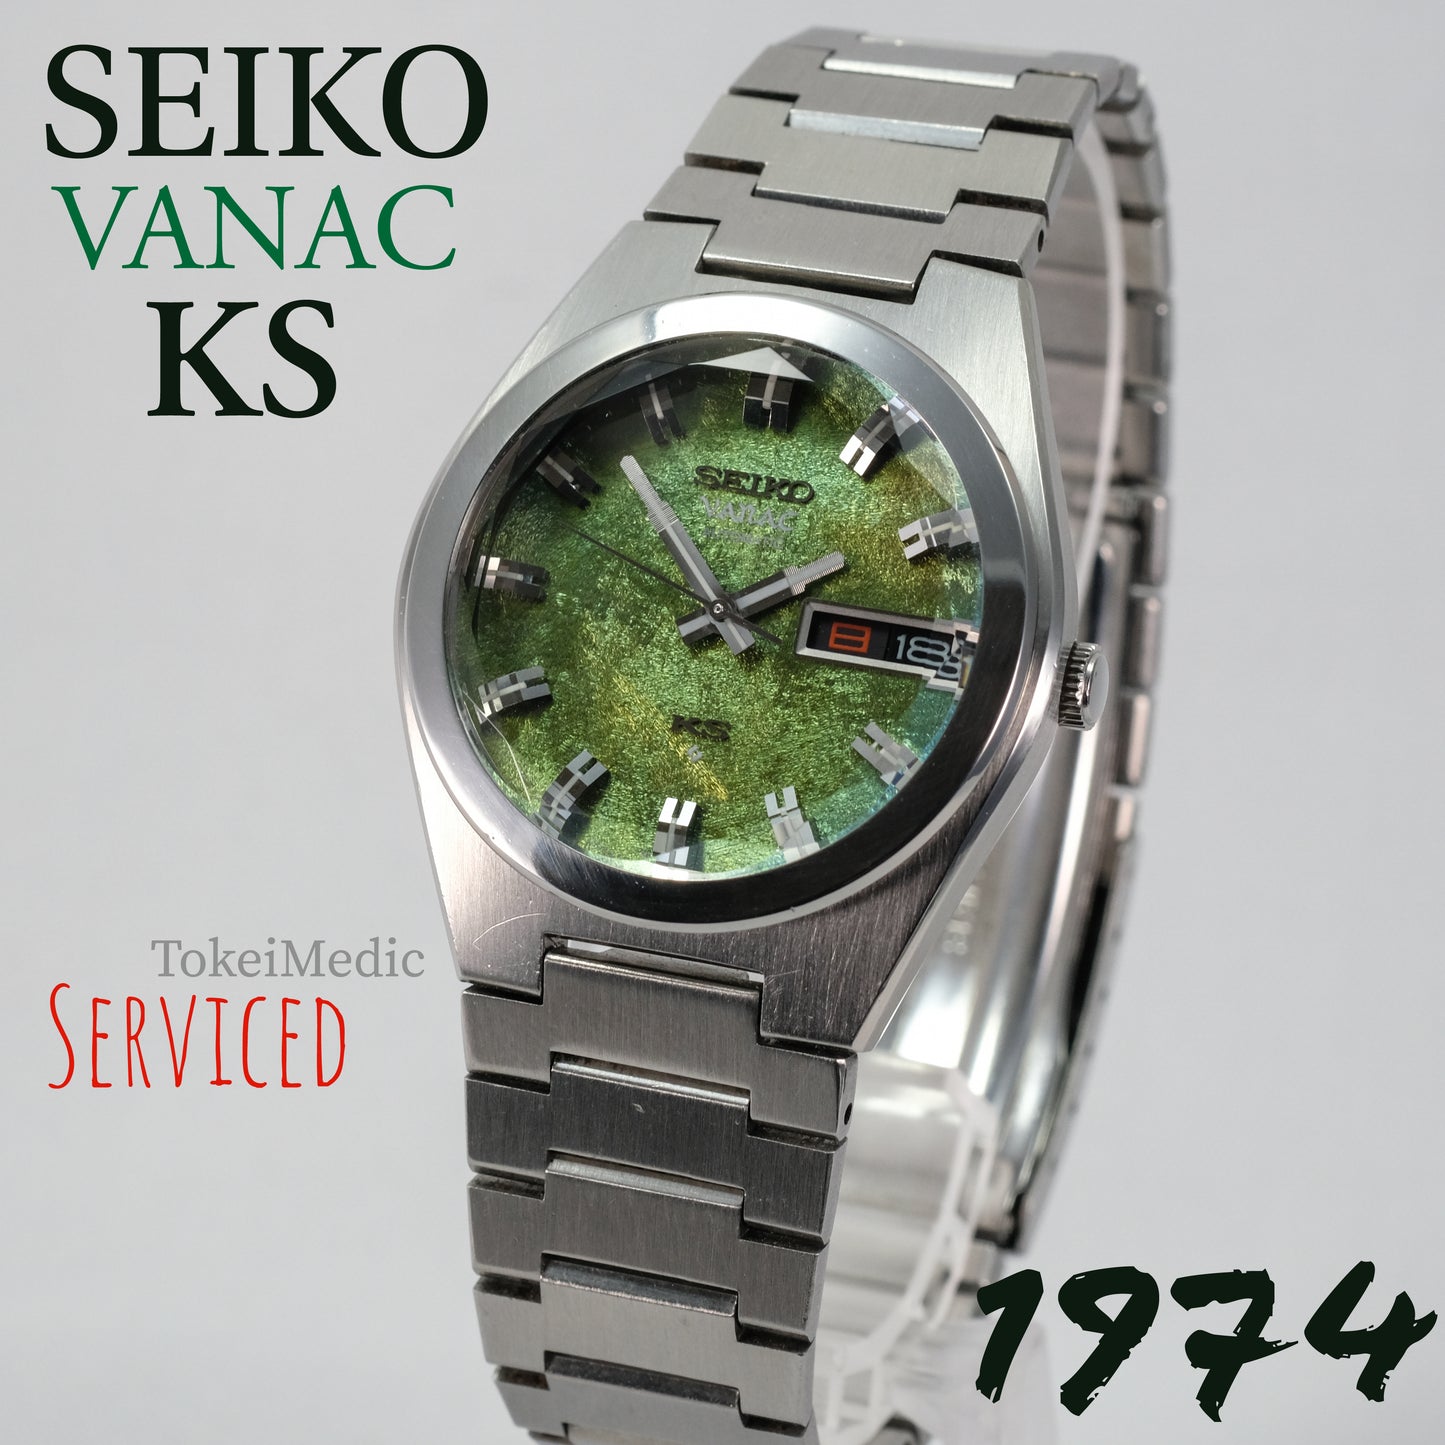 1974 Seiko Vanac KS 5626-7250